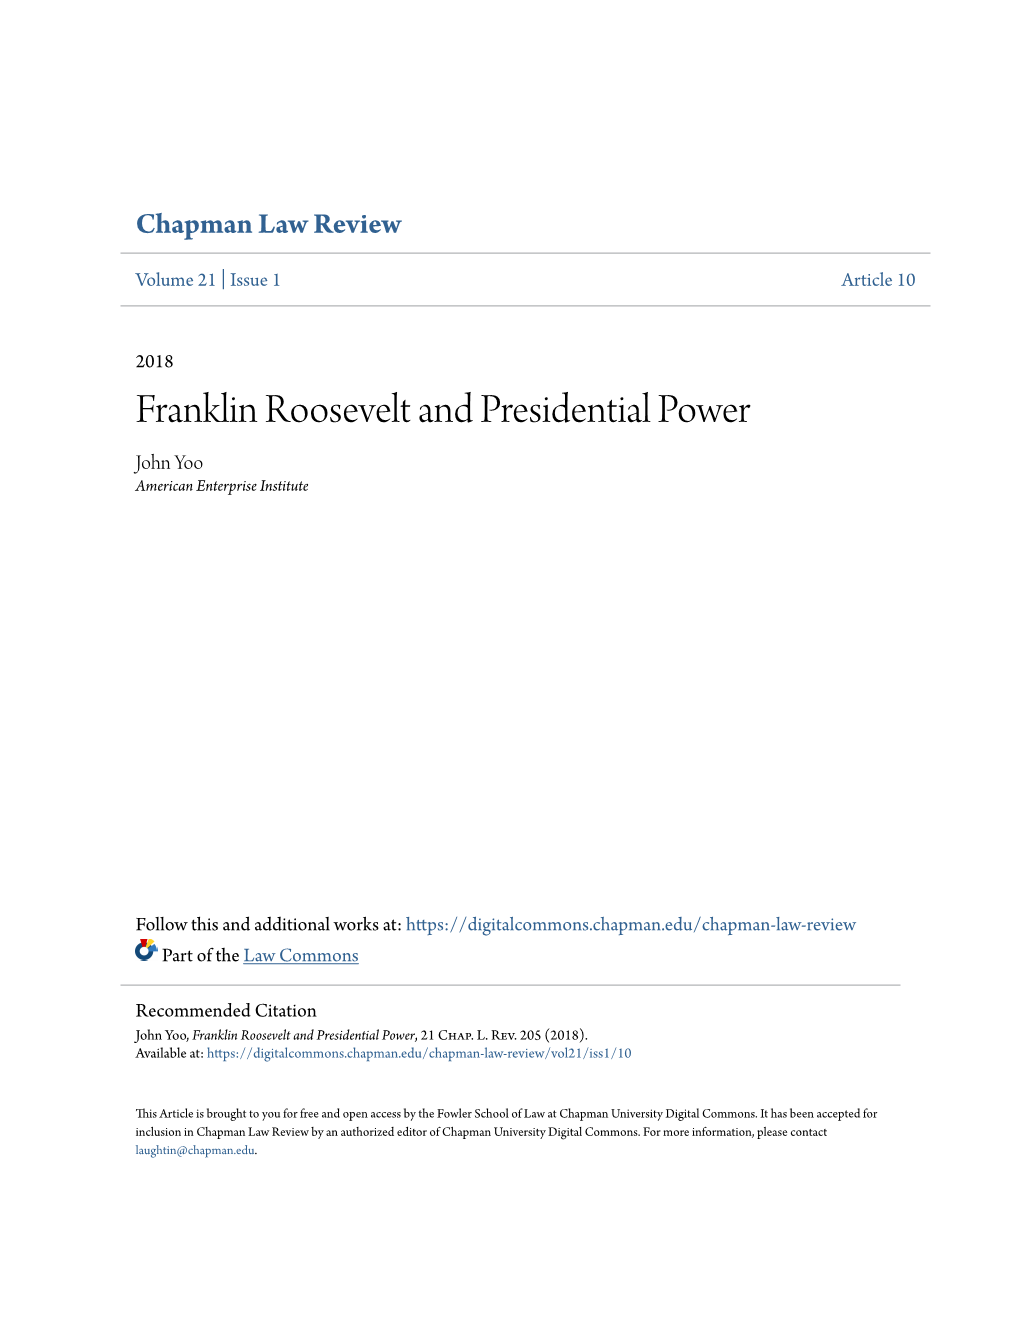 Franklin Roosevelt and Presidential Power John Yoo American Enterprise Institute